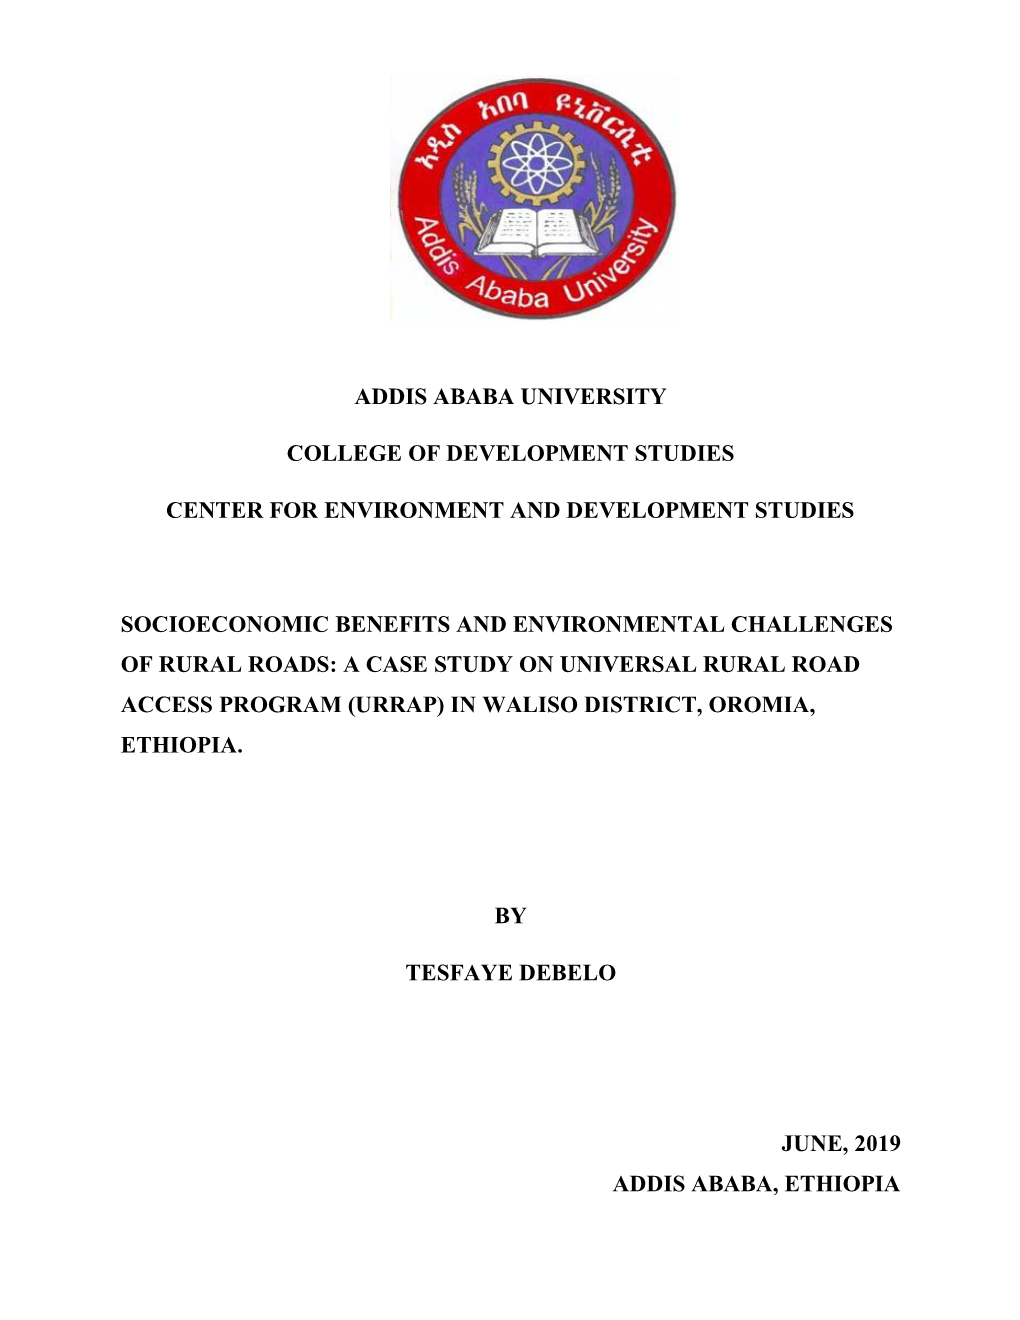 Addis Ababa University College of Development